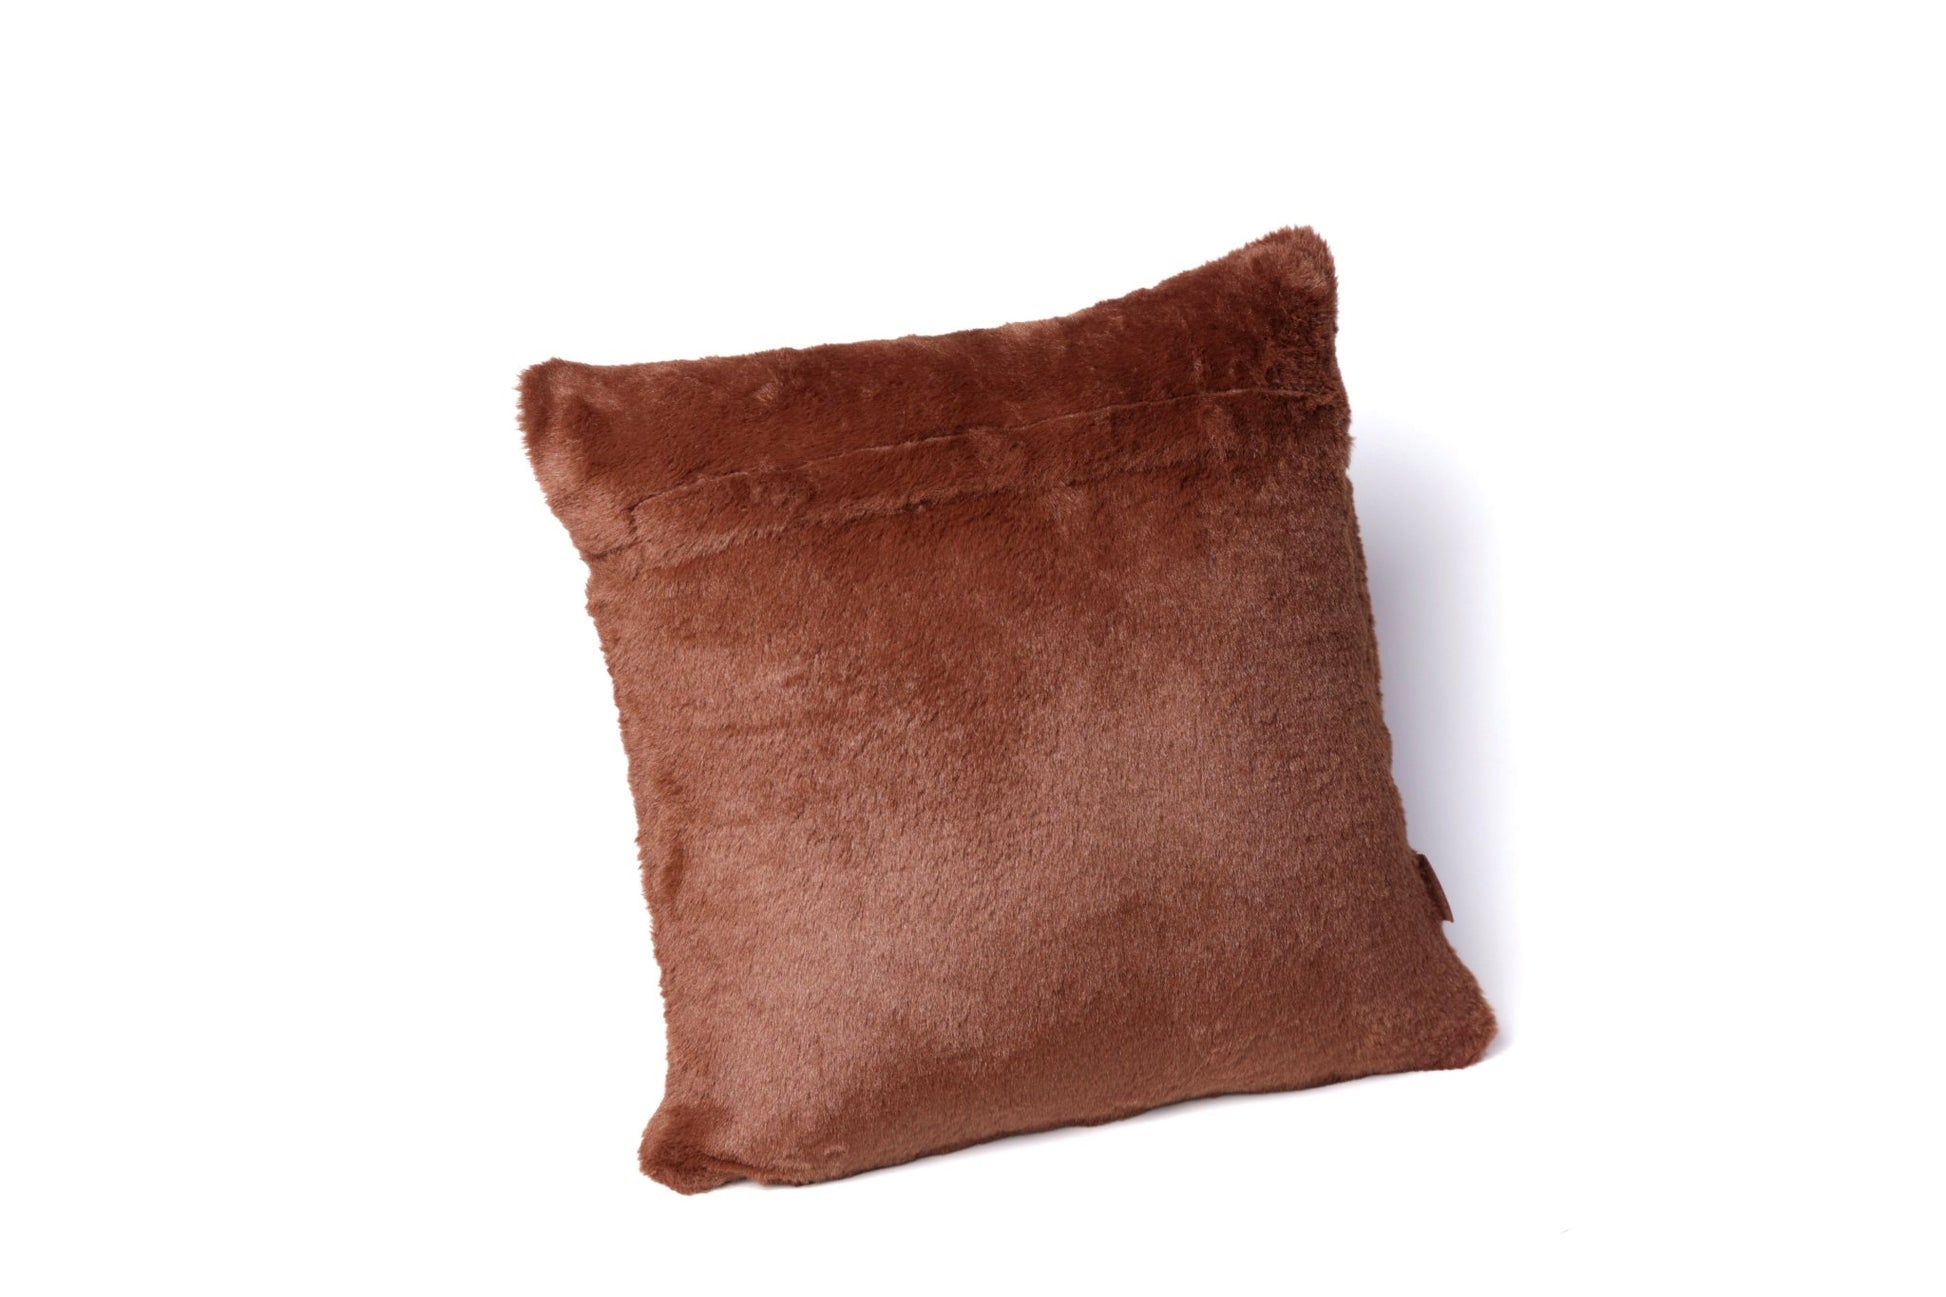 Cushions Covers - Araani Design